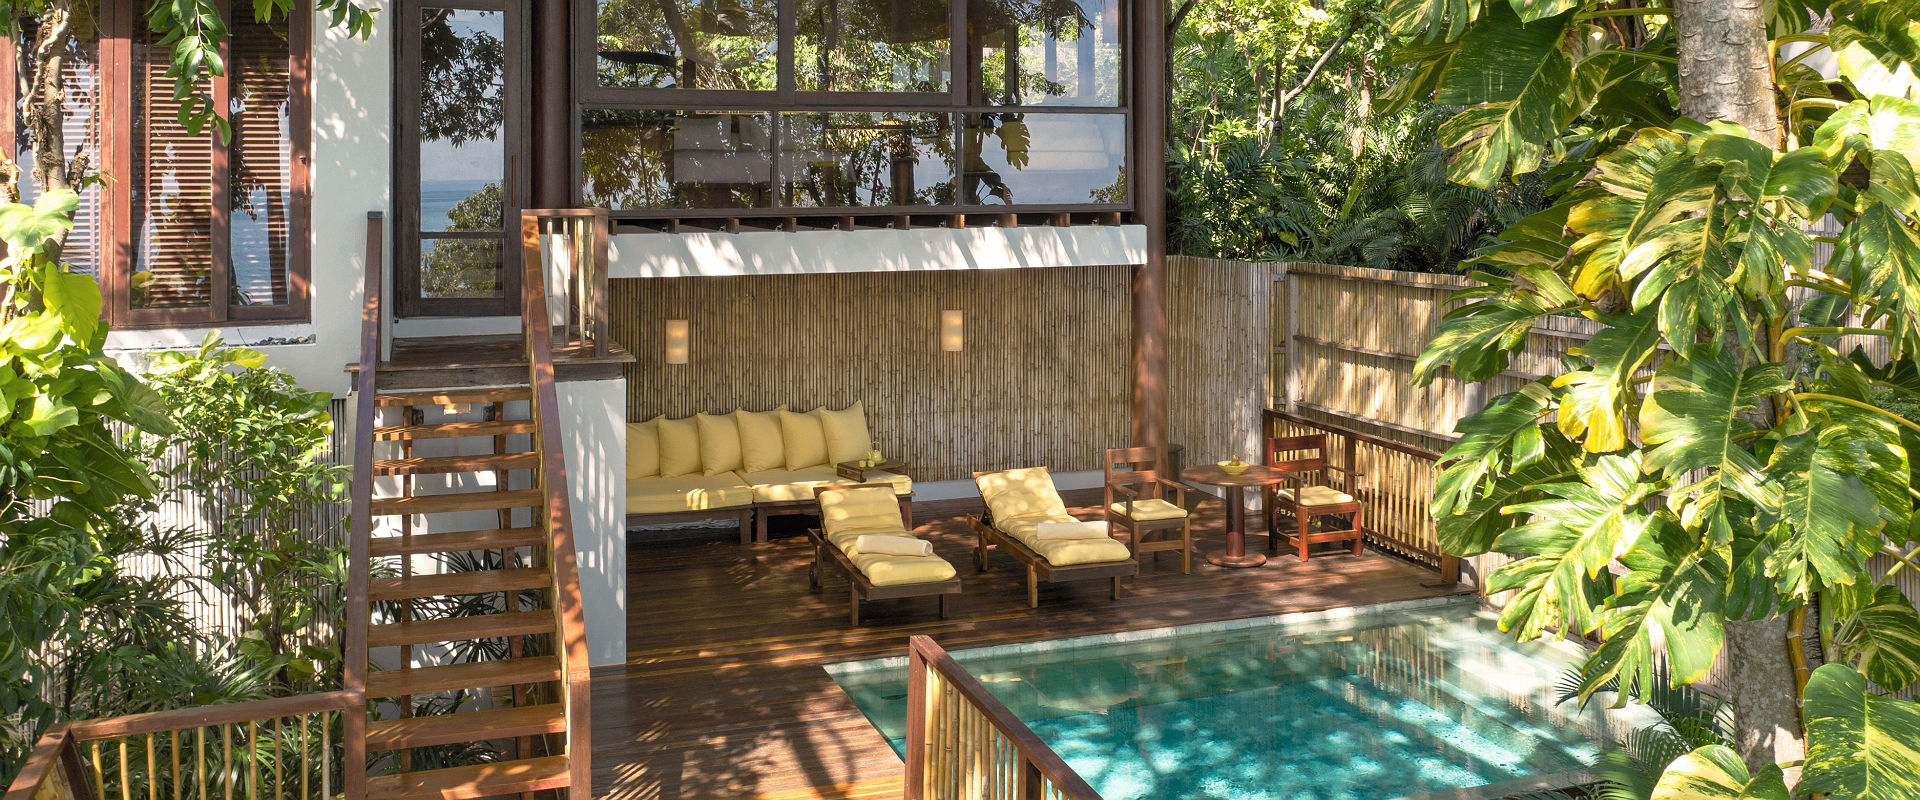 Six Senses Samui - Hiedaway Pool Villa terrasse et piscine